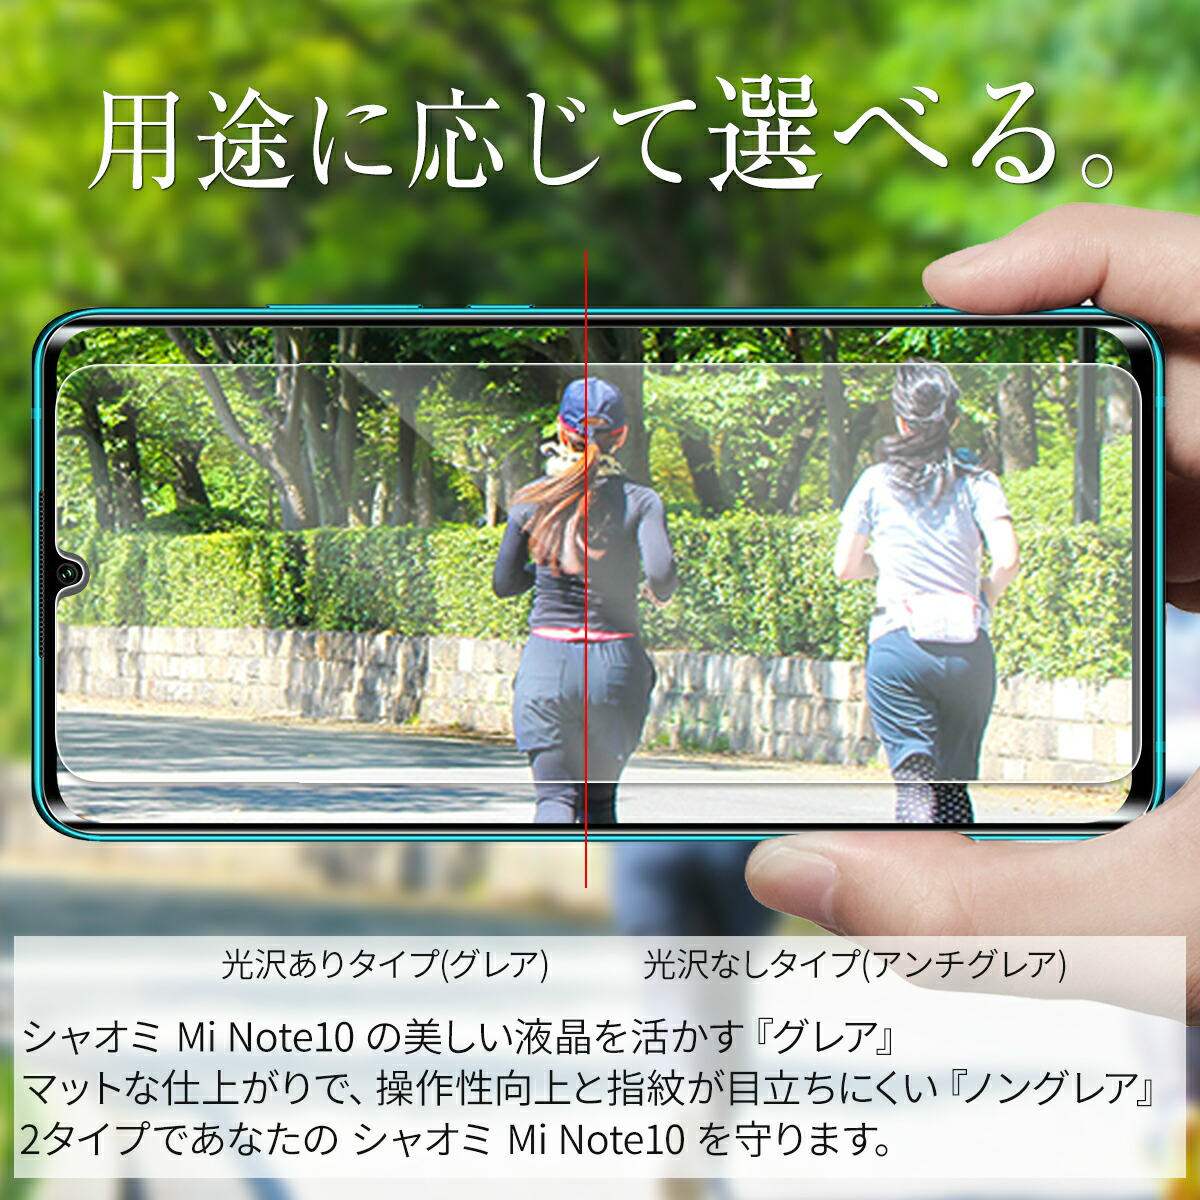 Xiaomi Mi Note 10 スマホ ケース フィルム カバー ブルーライトカット スクリーンフィルム 画面保護 液晶保護 携帯 シャオミー 人気 キズ防止 キズ 送料無料 液晶保護フィルム